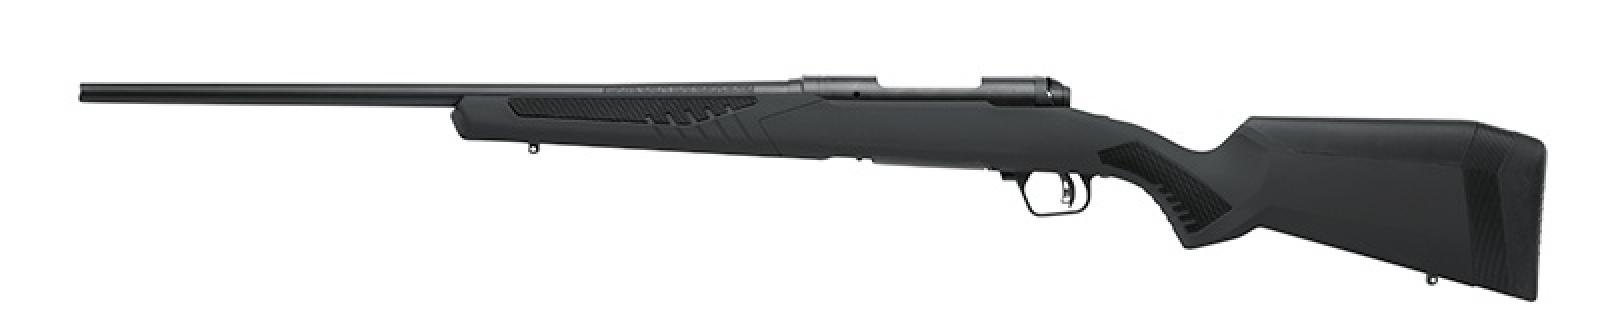 Savage 110 Hunter 7mm Hunting Rifle